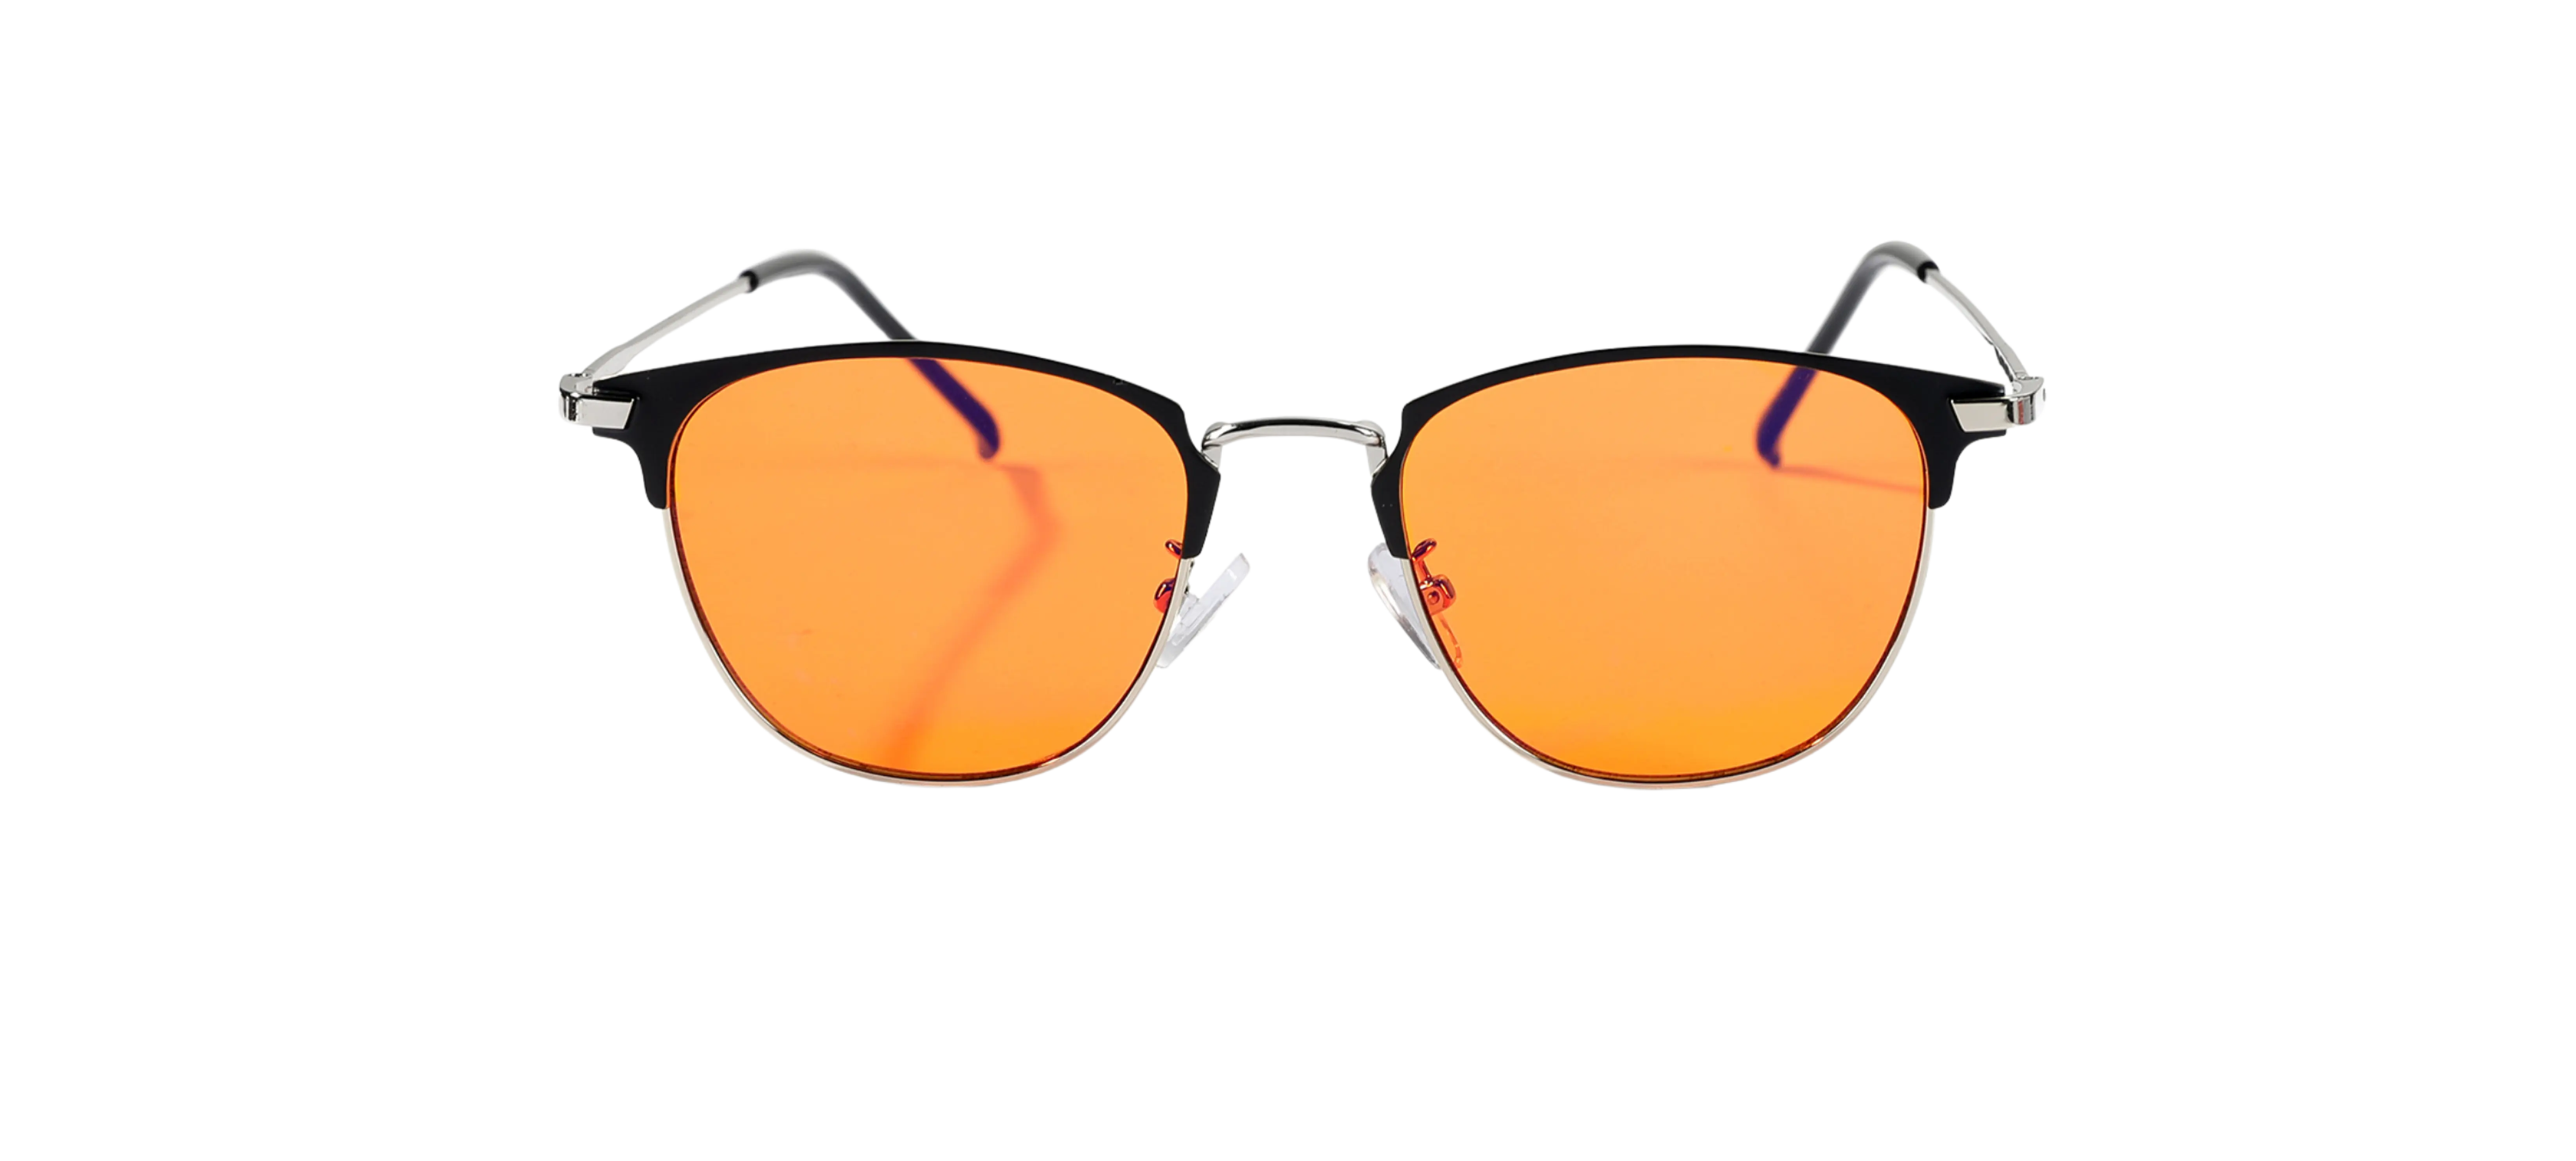 Orange-tinted aviator sunglasses against a black background.